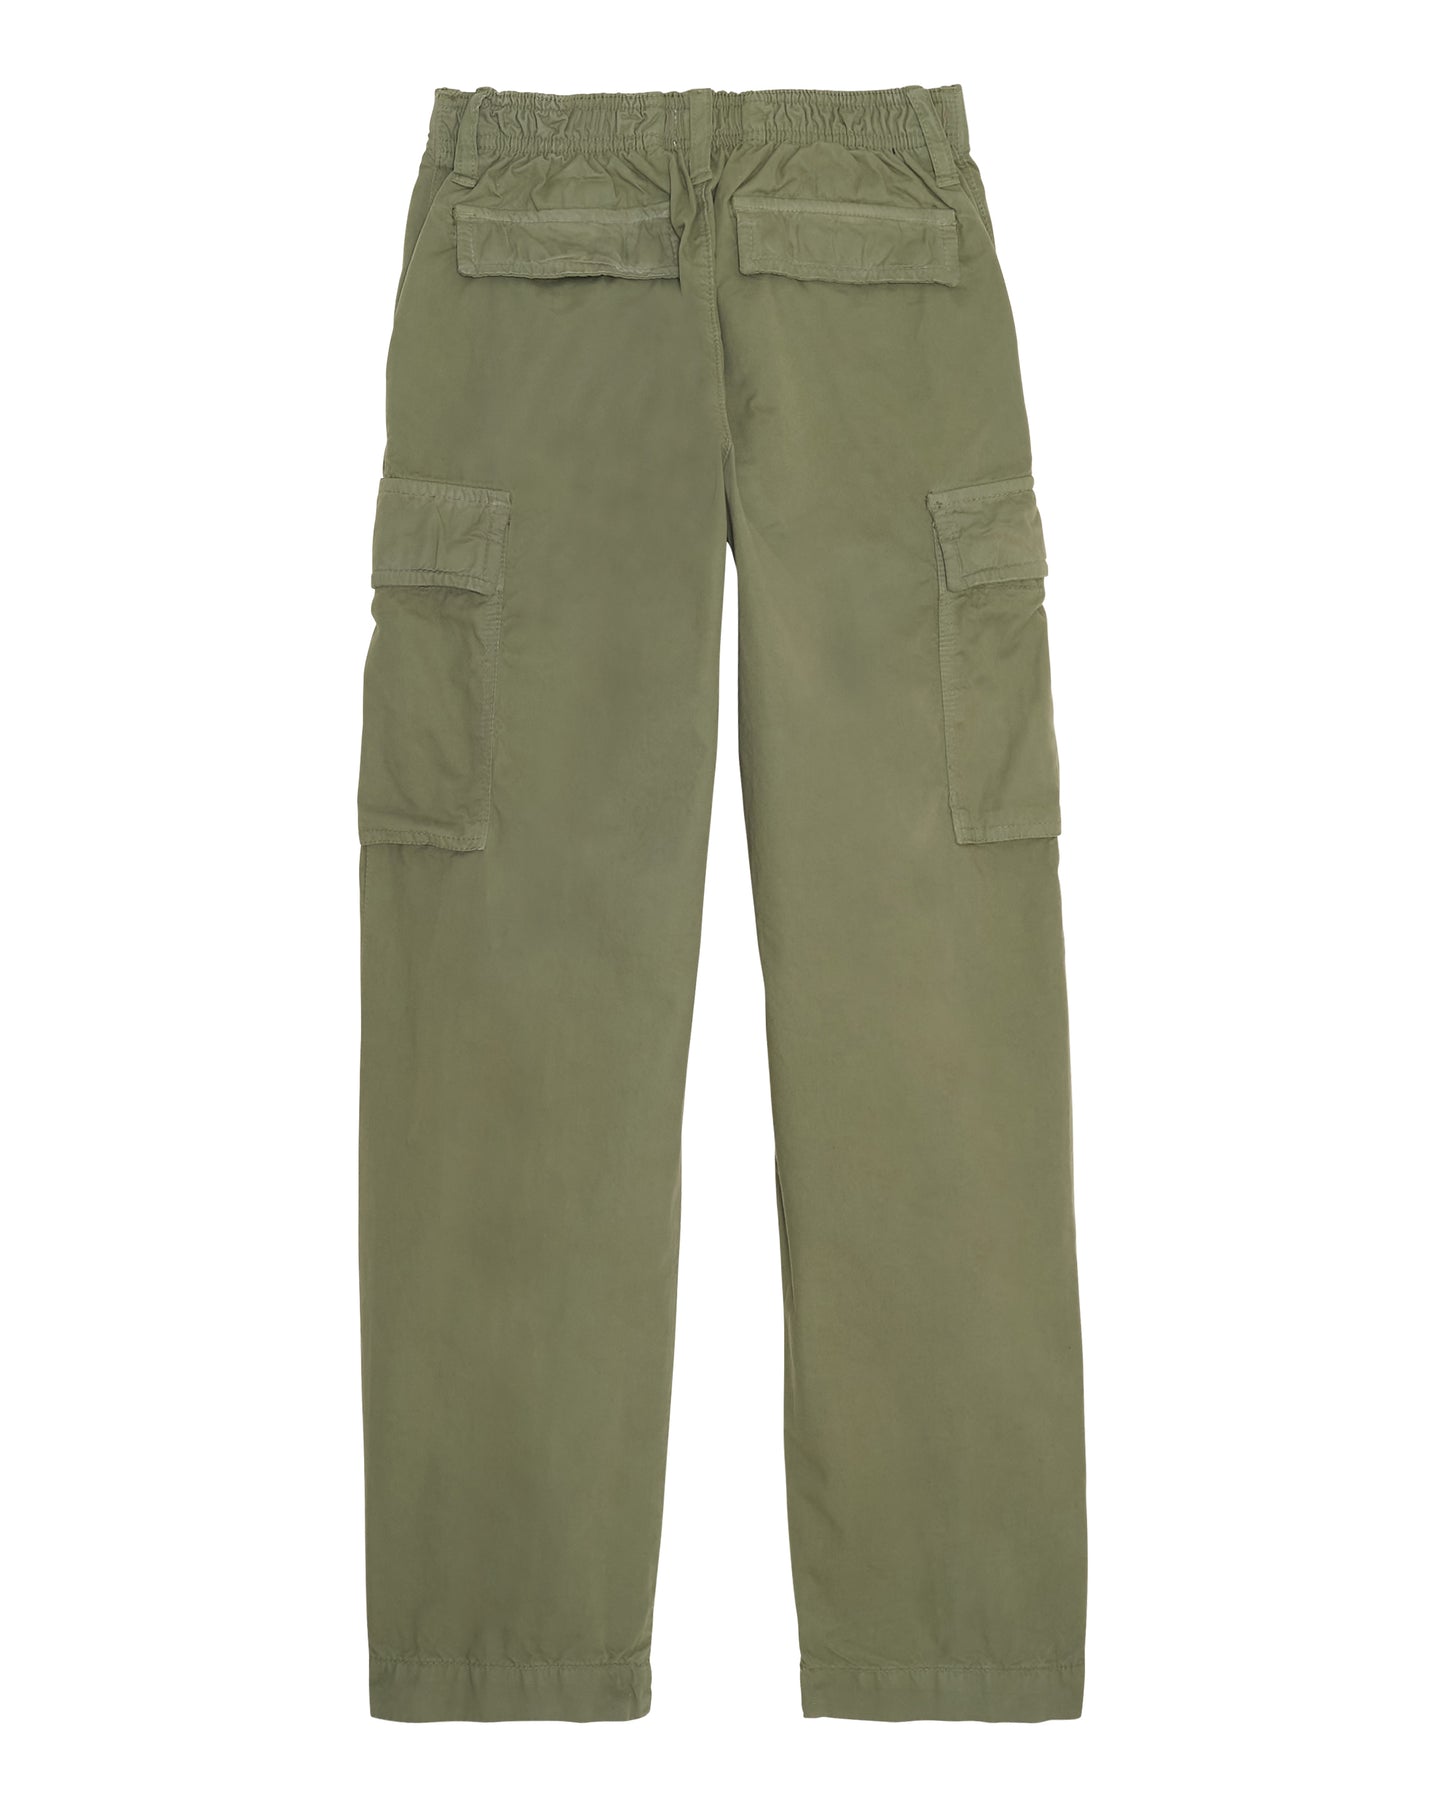 Pantalon Garçon chino Vert militaire Tyl BBPAA121-02